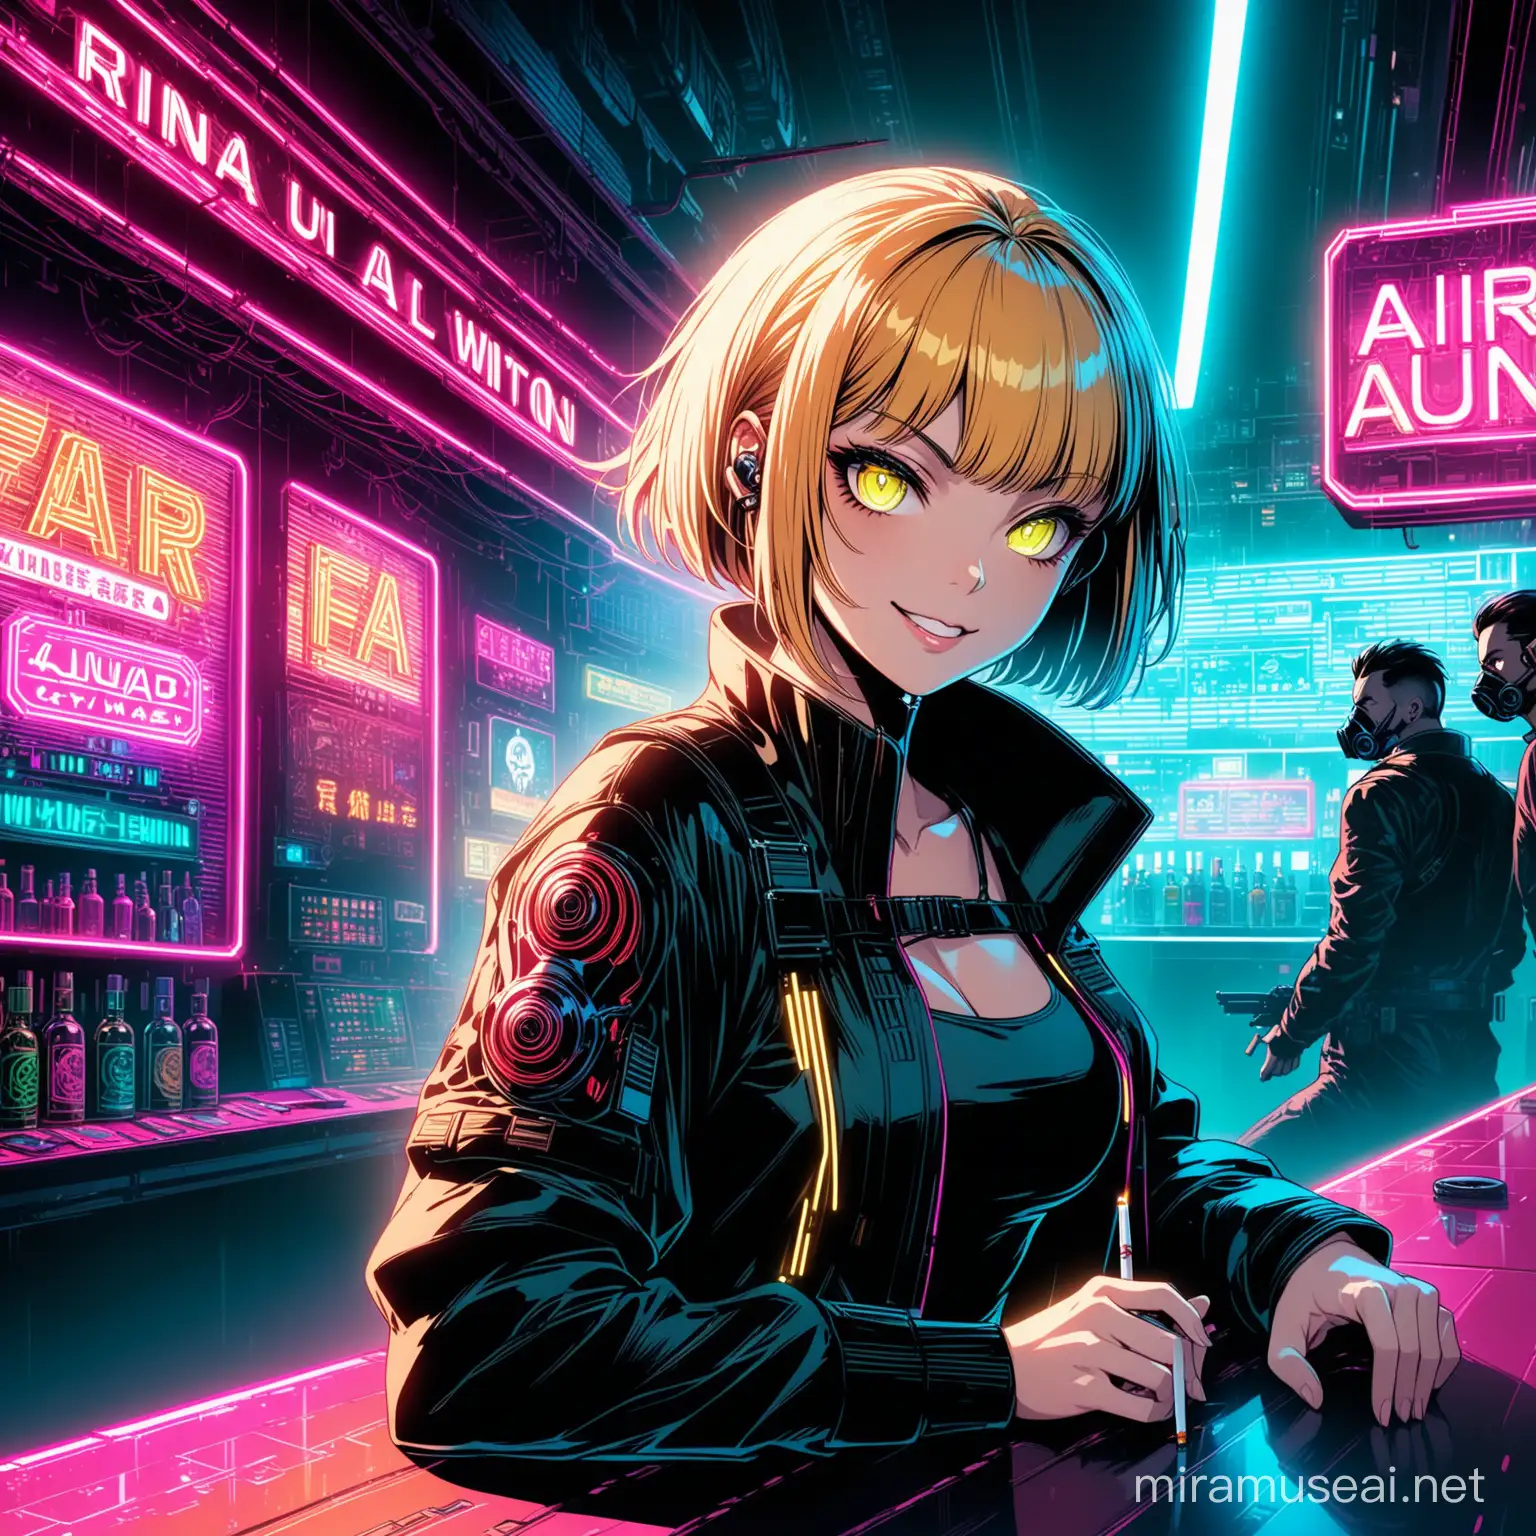 Futuristic Cyberpunk Anime Smirking Blonde with Gas Mask in Neonlit Bar